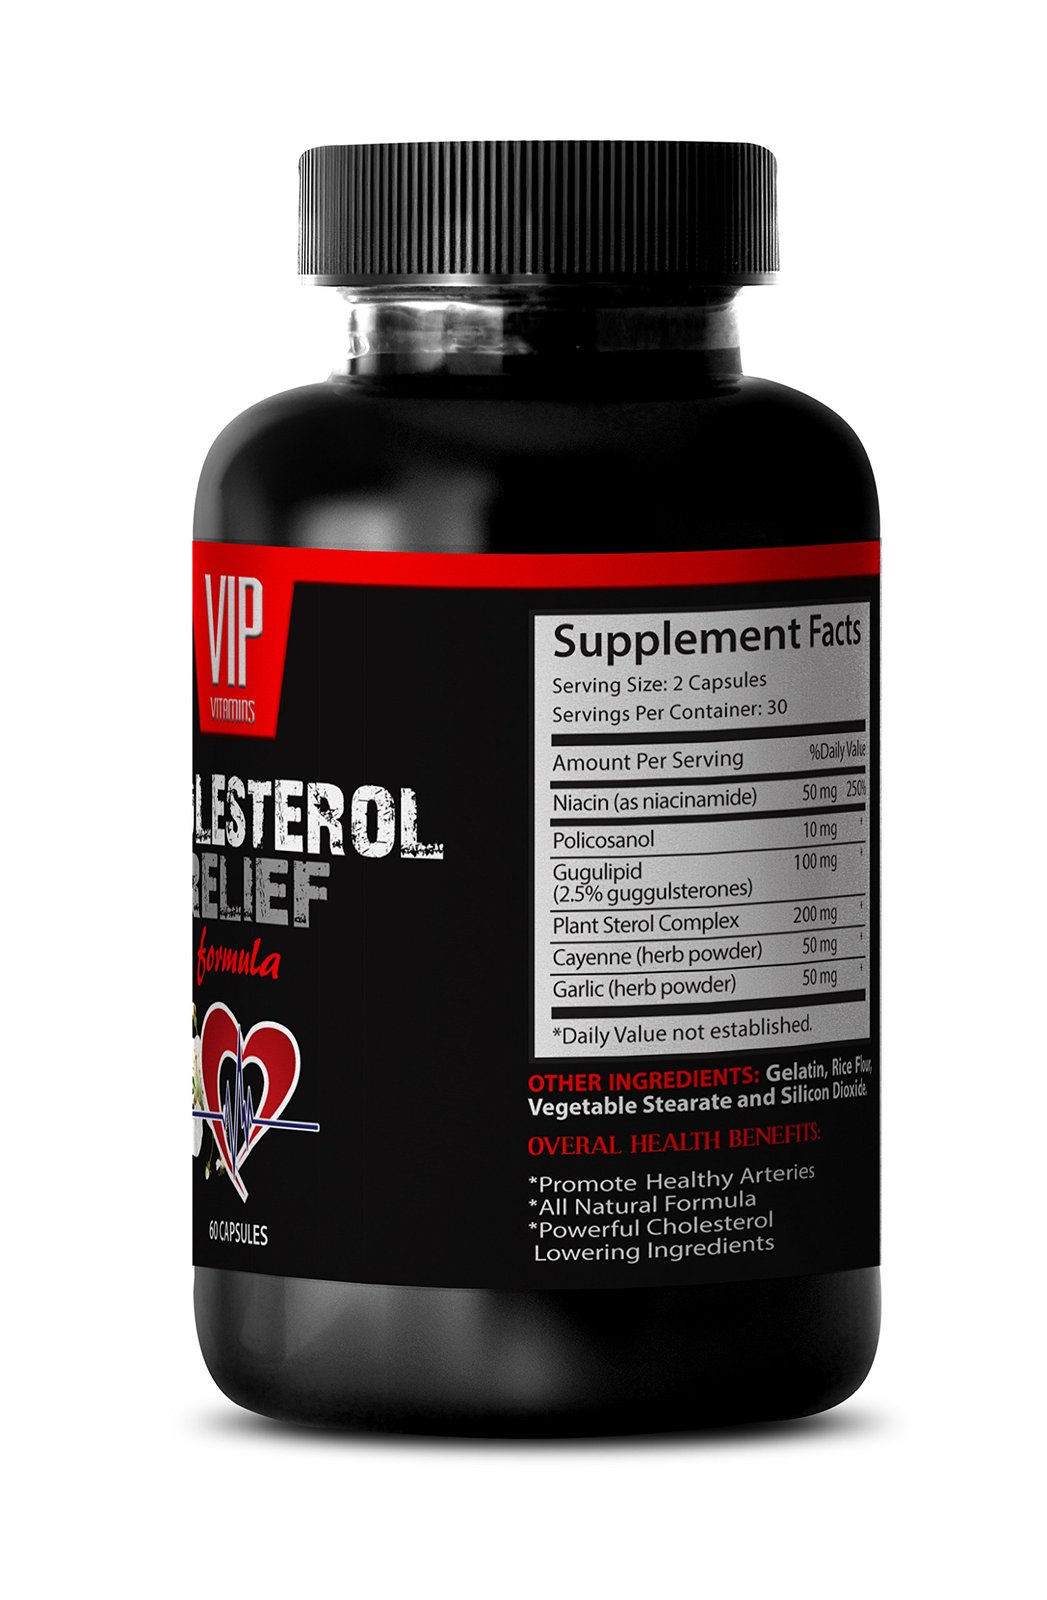 Cholesterol lowering vitamins - CHOLESTEROL RELIEF FORMULA ...